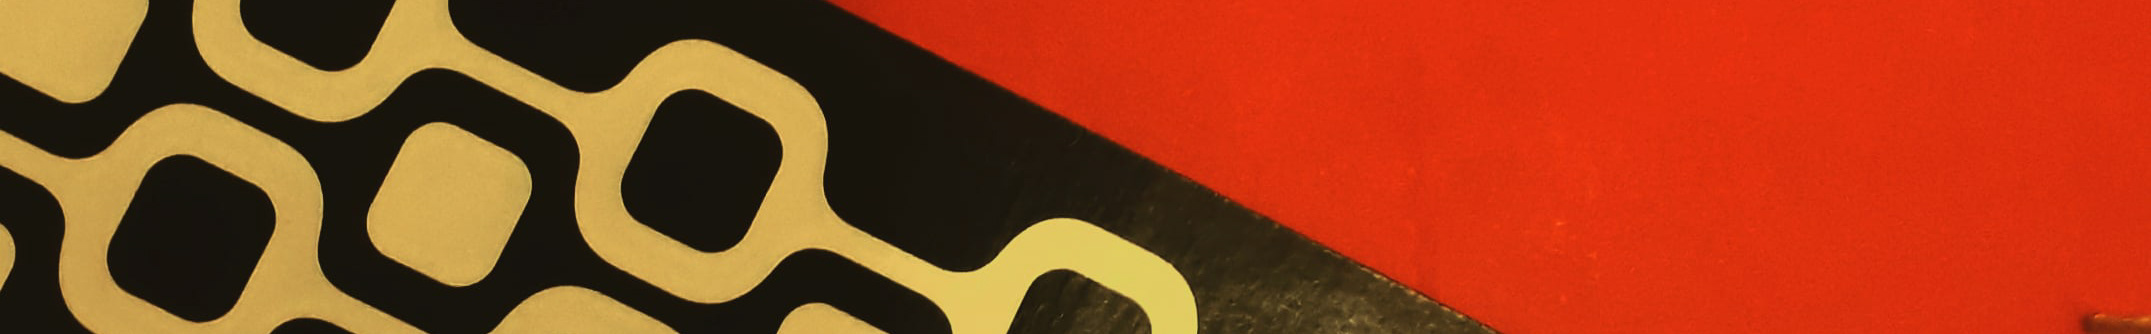 Ikiru Erê_Ubuntu's profile banner